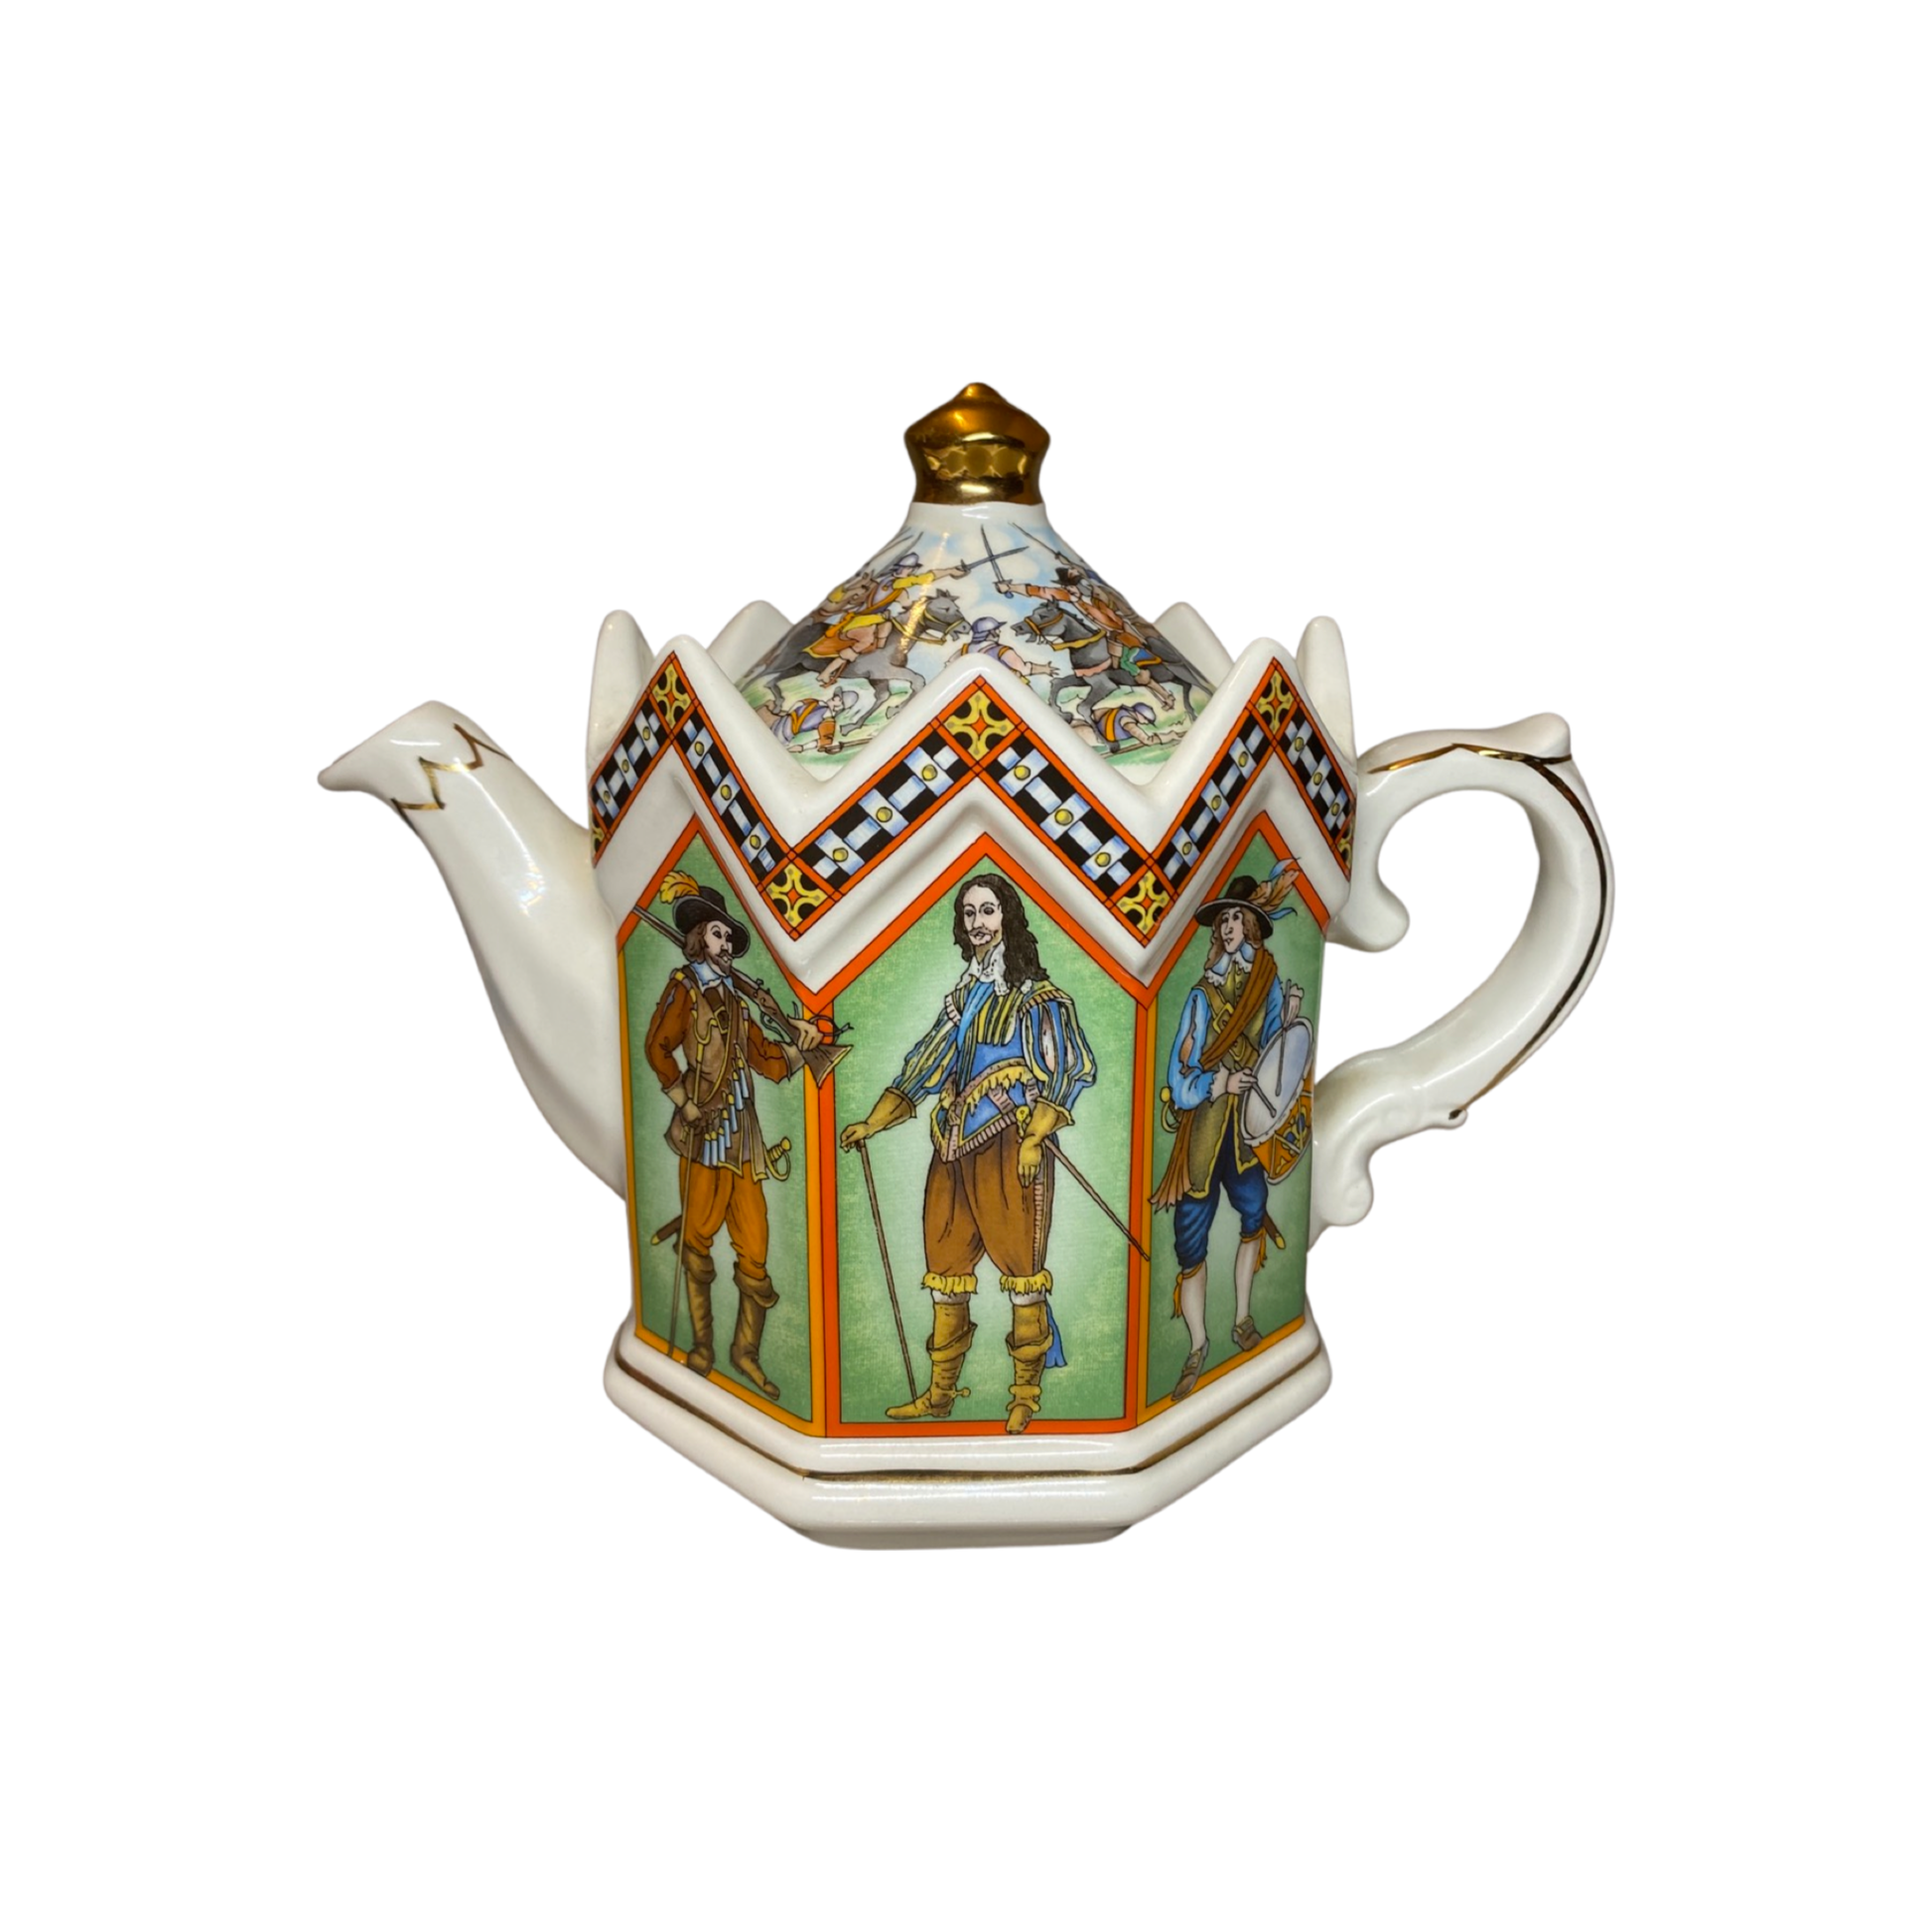 Sadler Minster Series - Charles I King Of England - Teapot